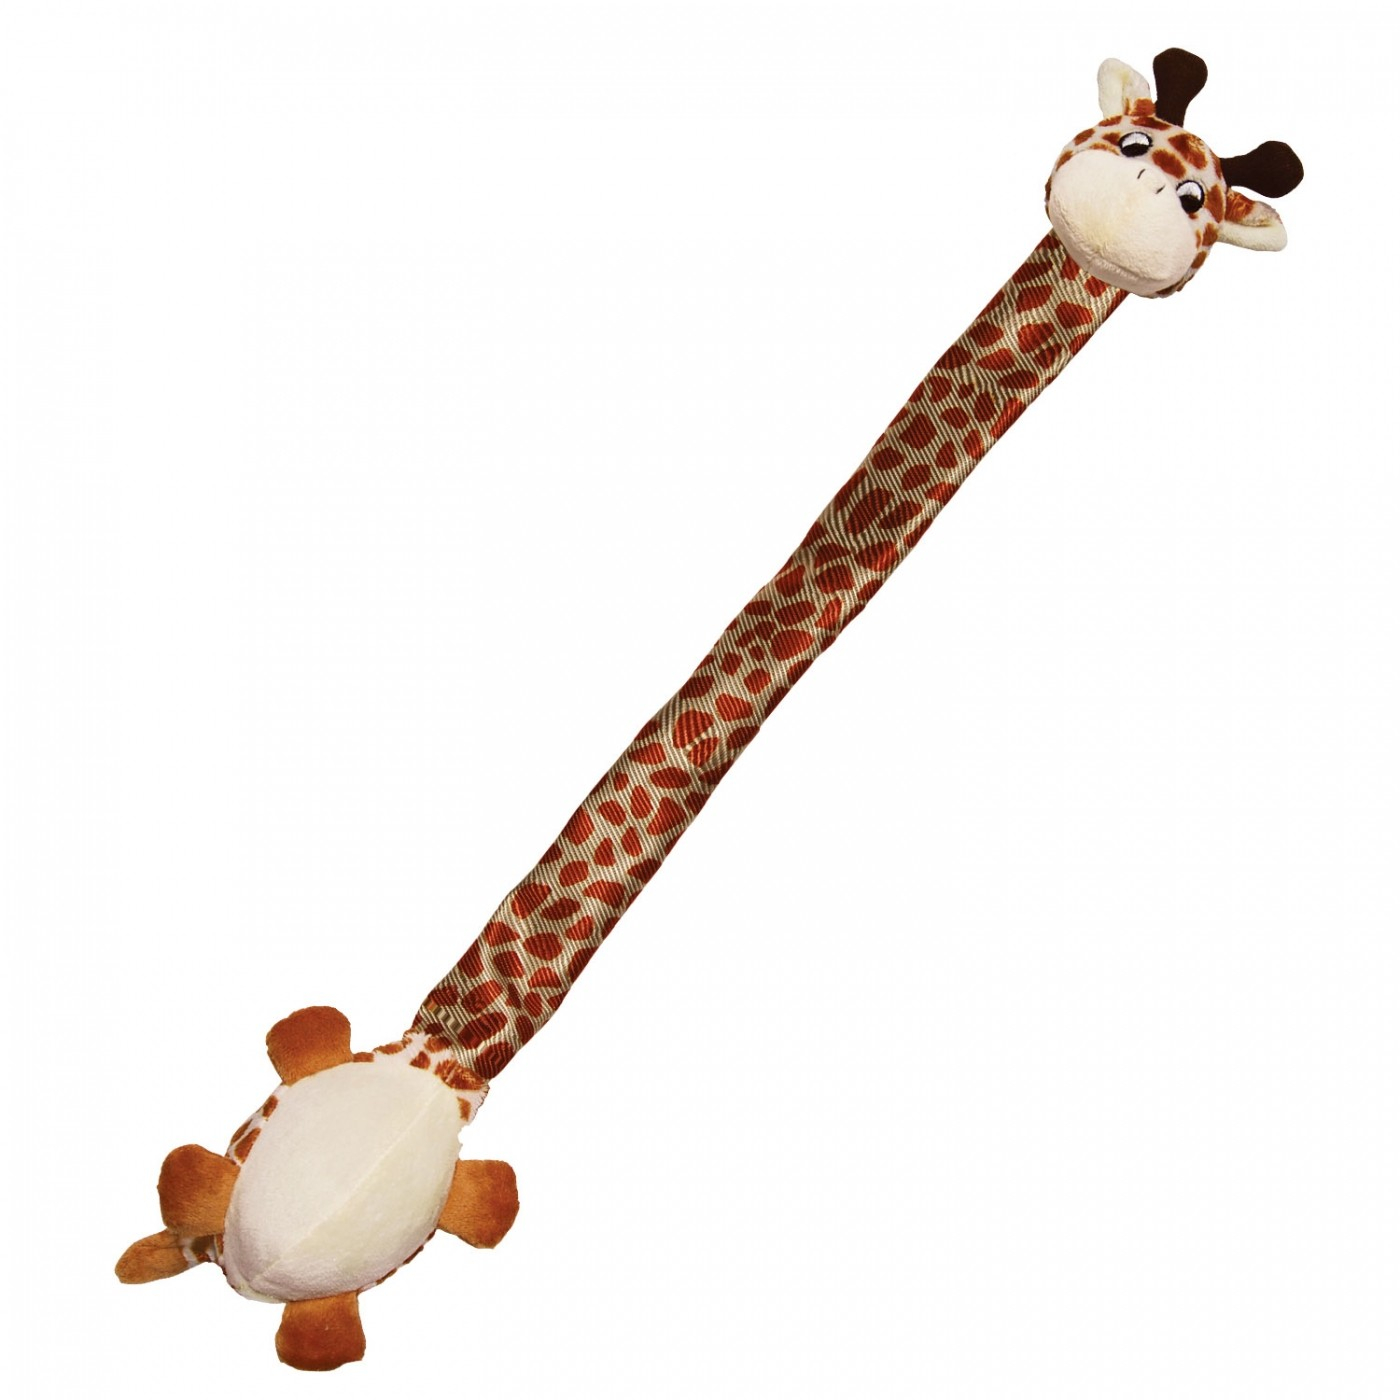 Brinquedo para cães KONG Danglers Girafa